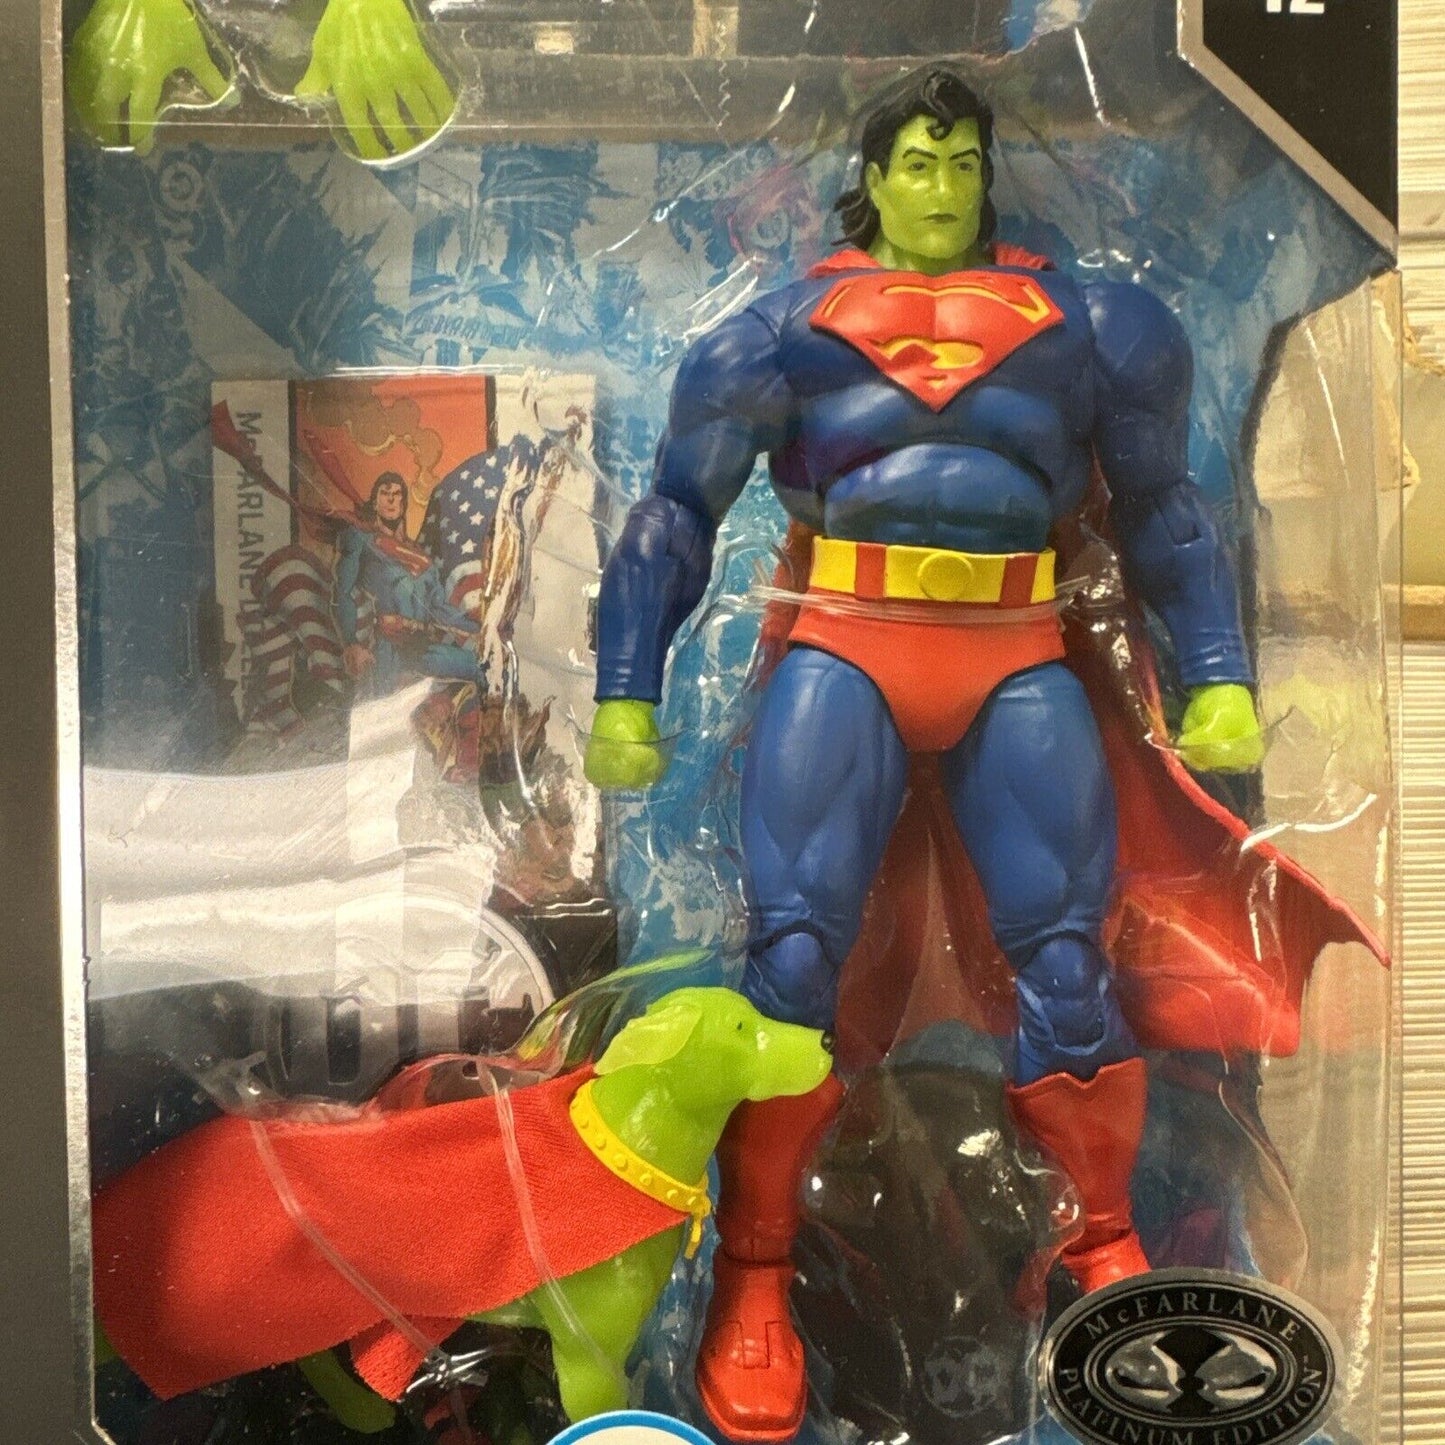 McFarlane DC Multiverse Superman & Krypto Platinum Edition Action Figure